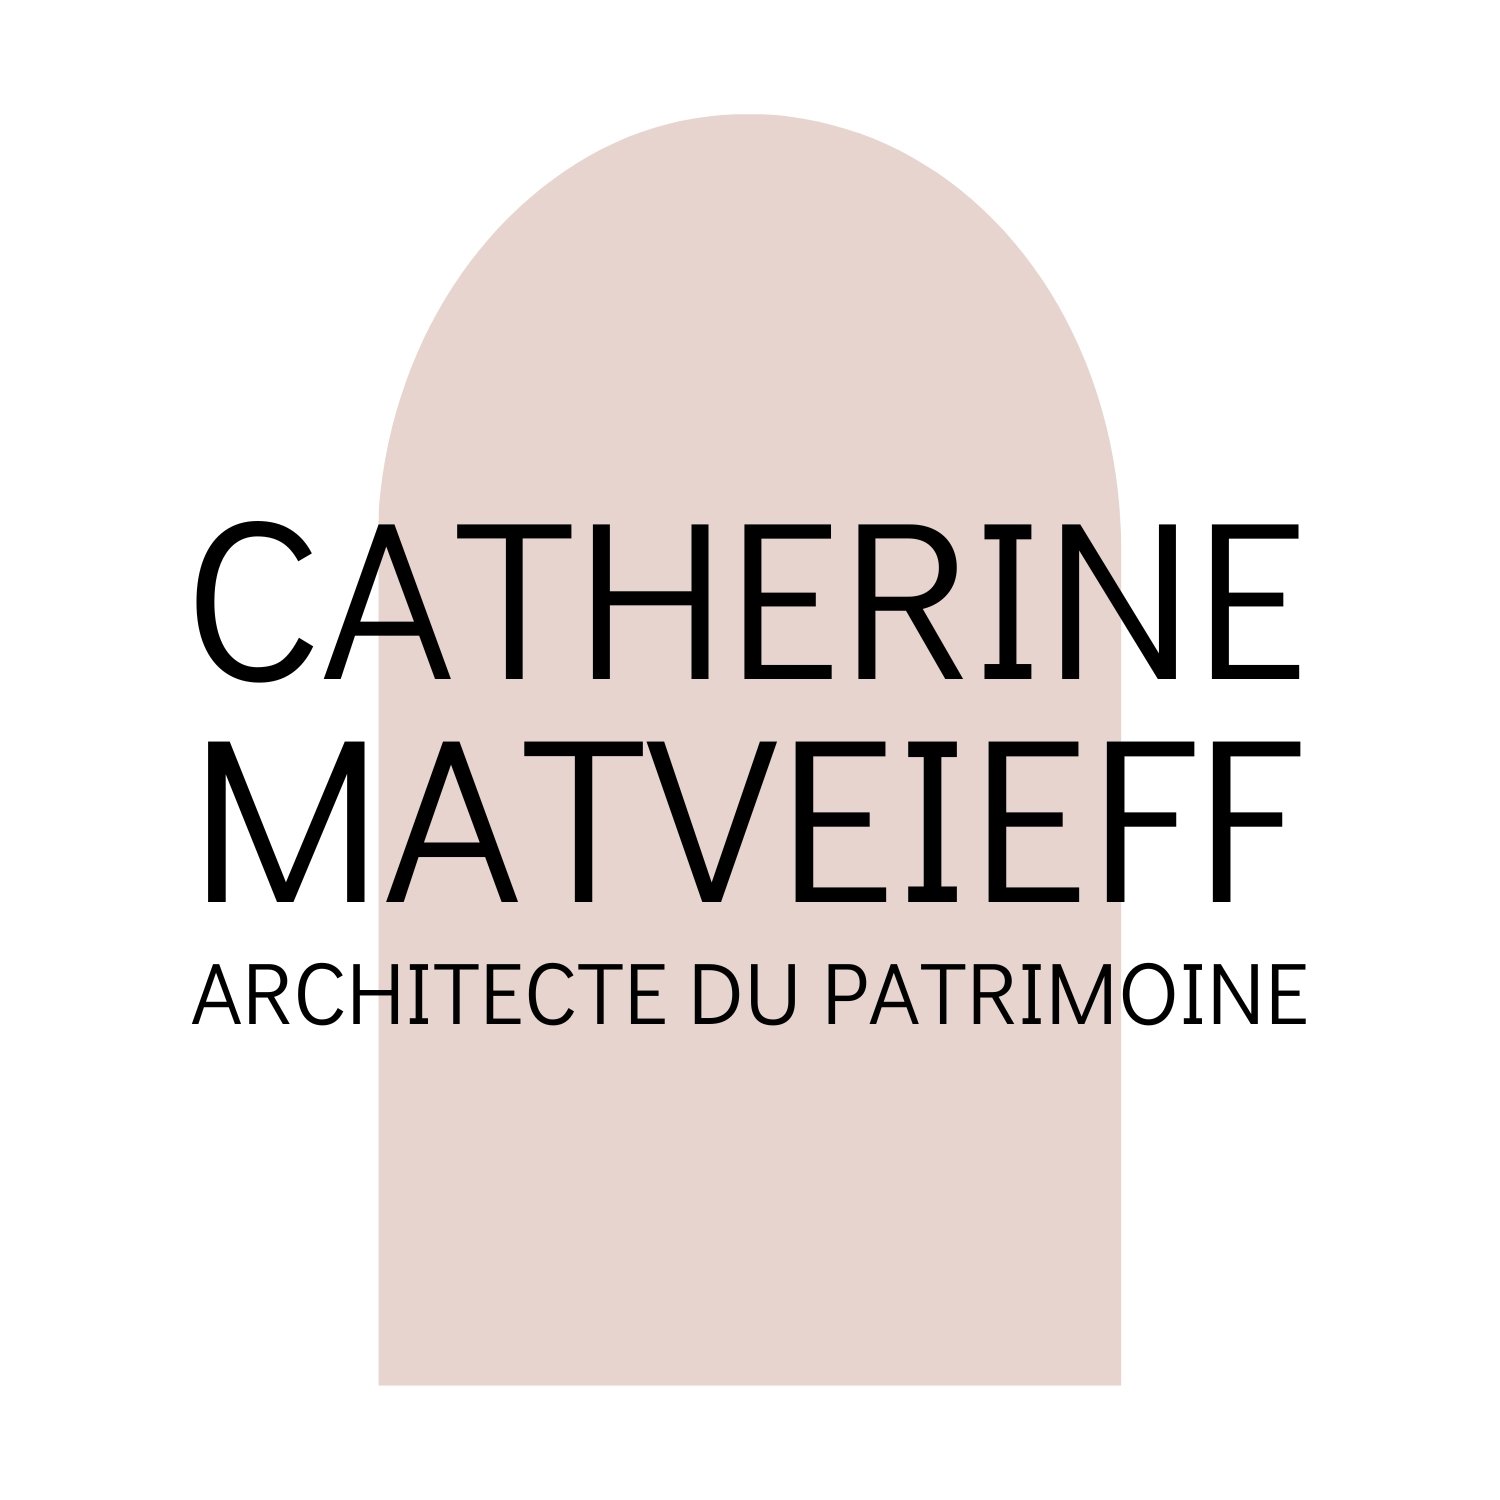 CATHERINE MATVEIEFF ARCHITECTE